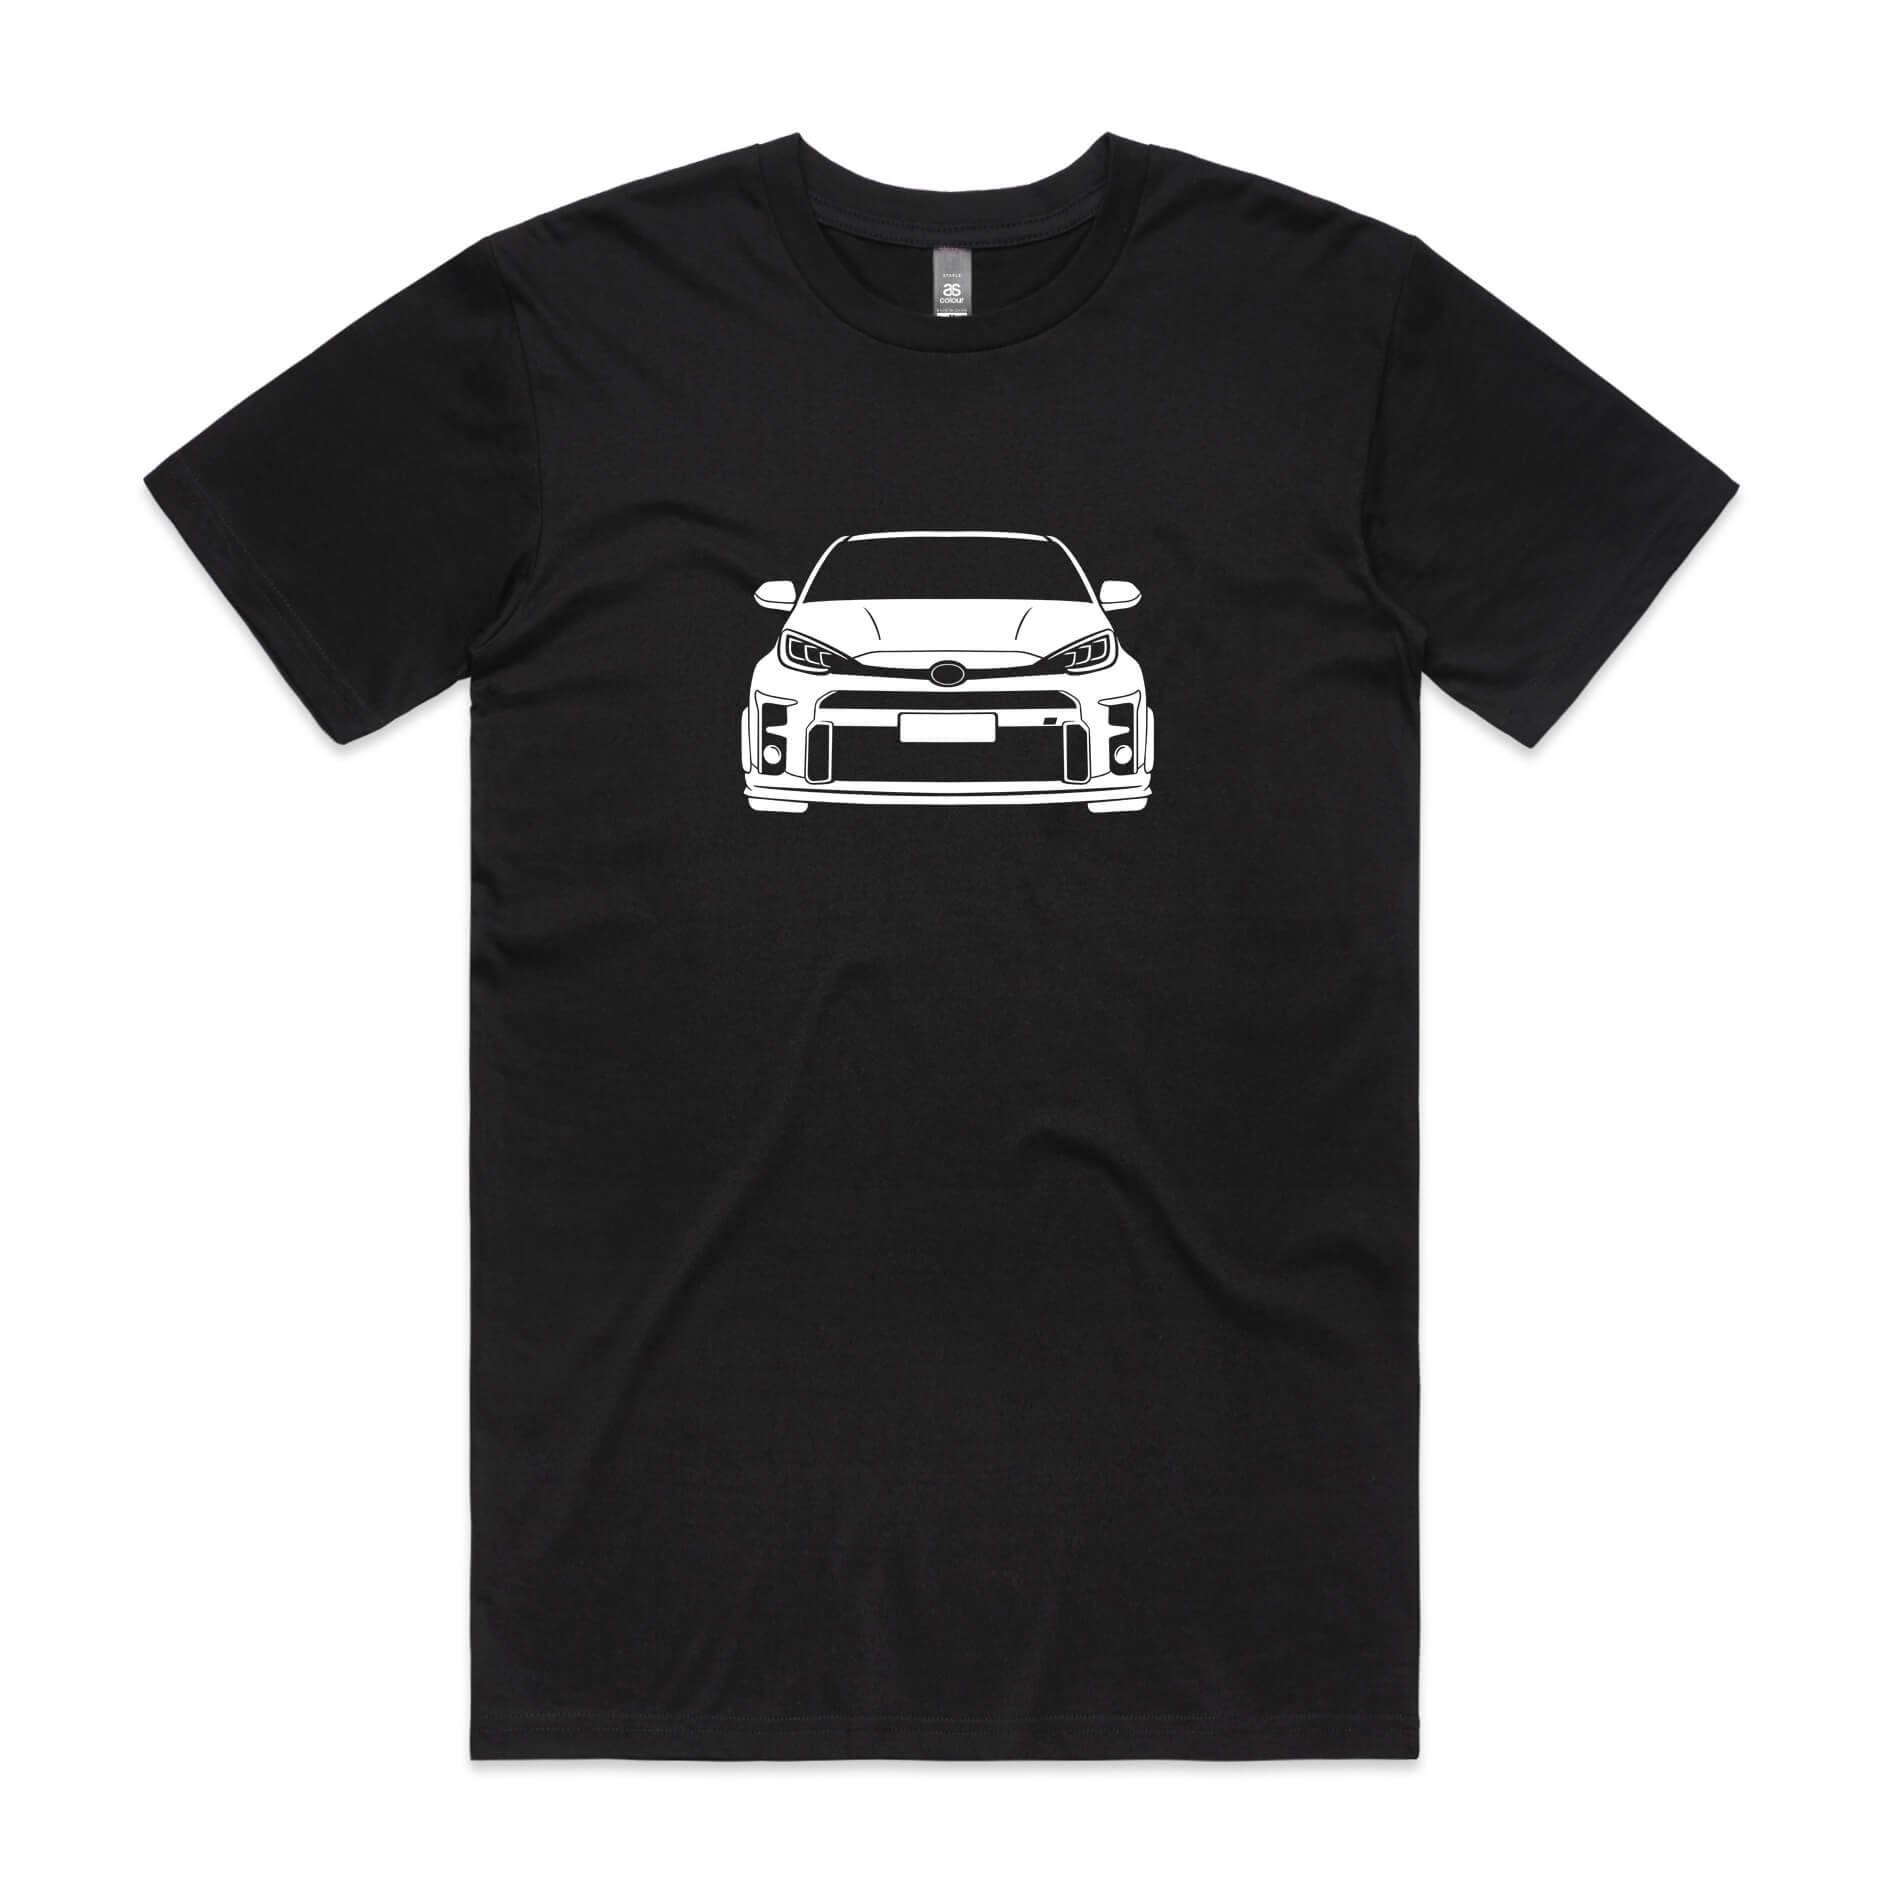 Toyota GR Yaris t-shirt in black